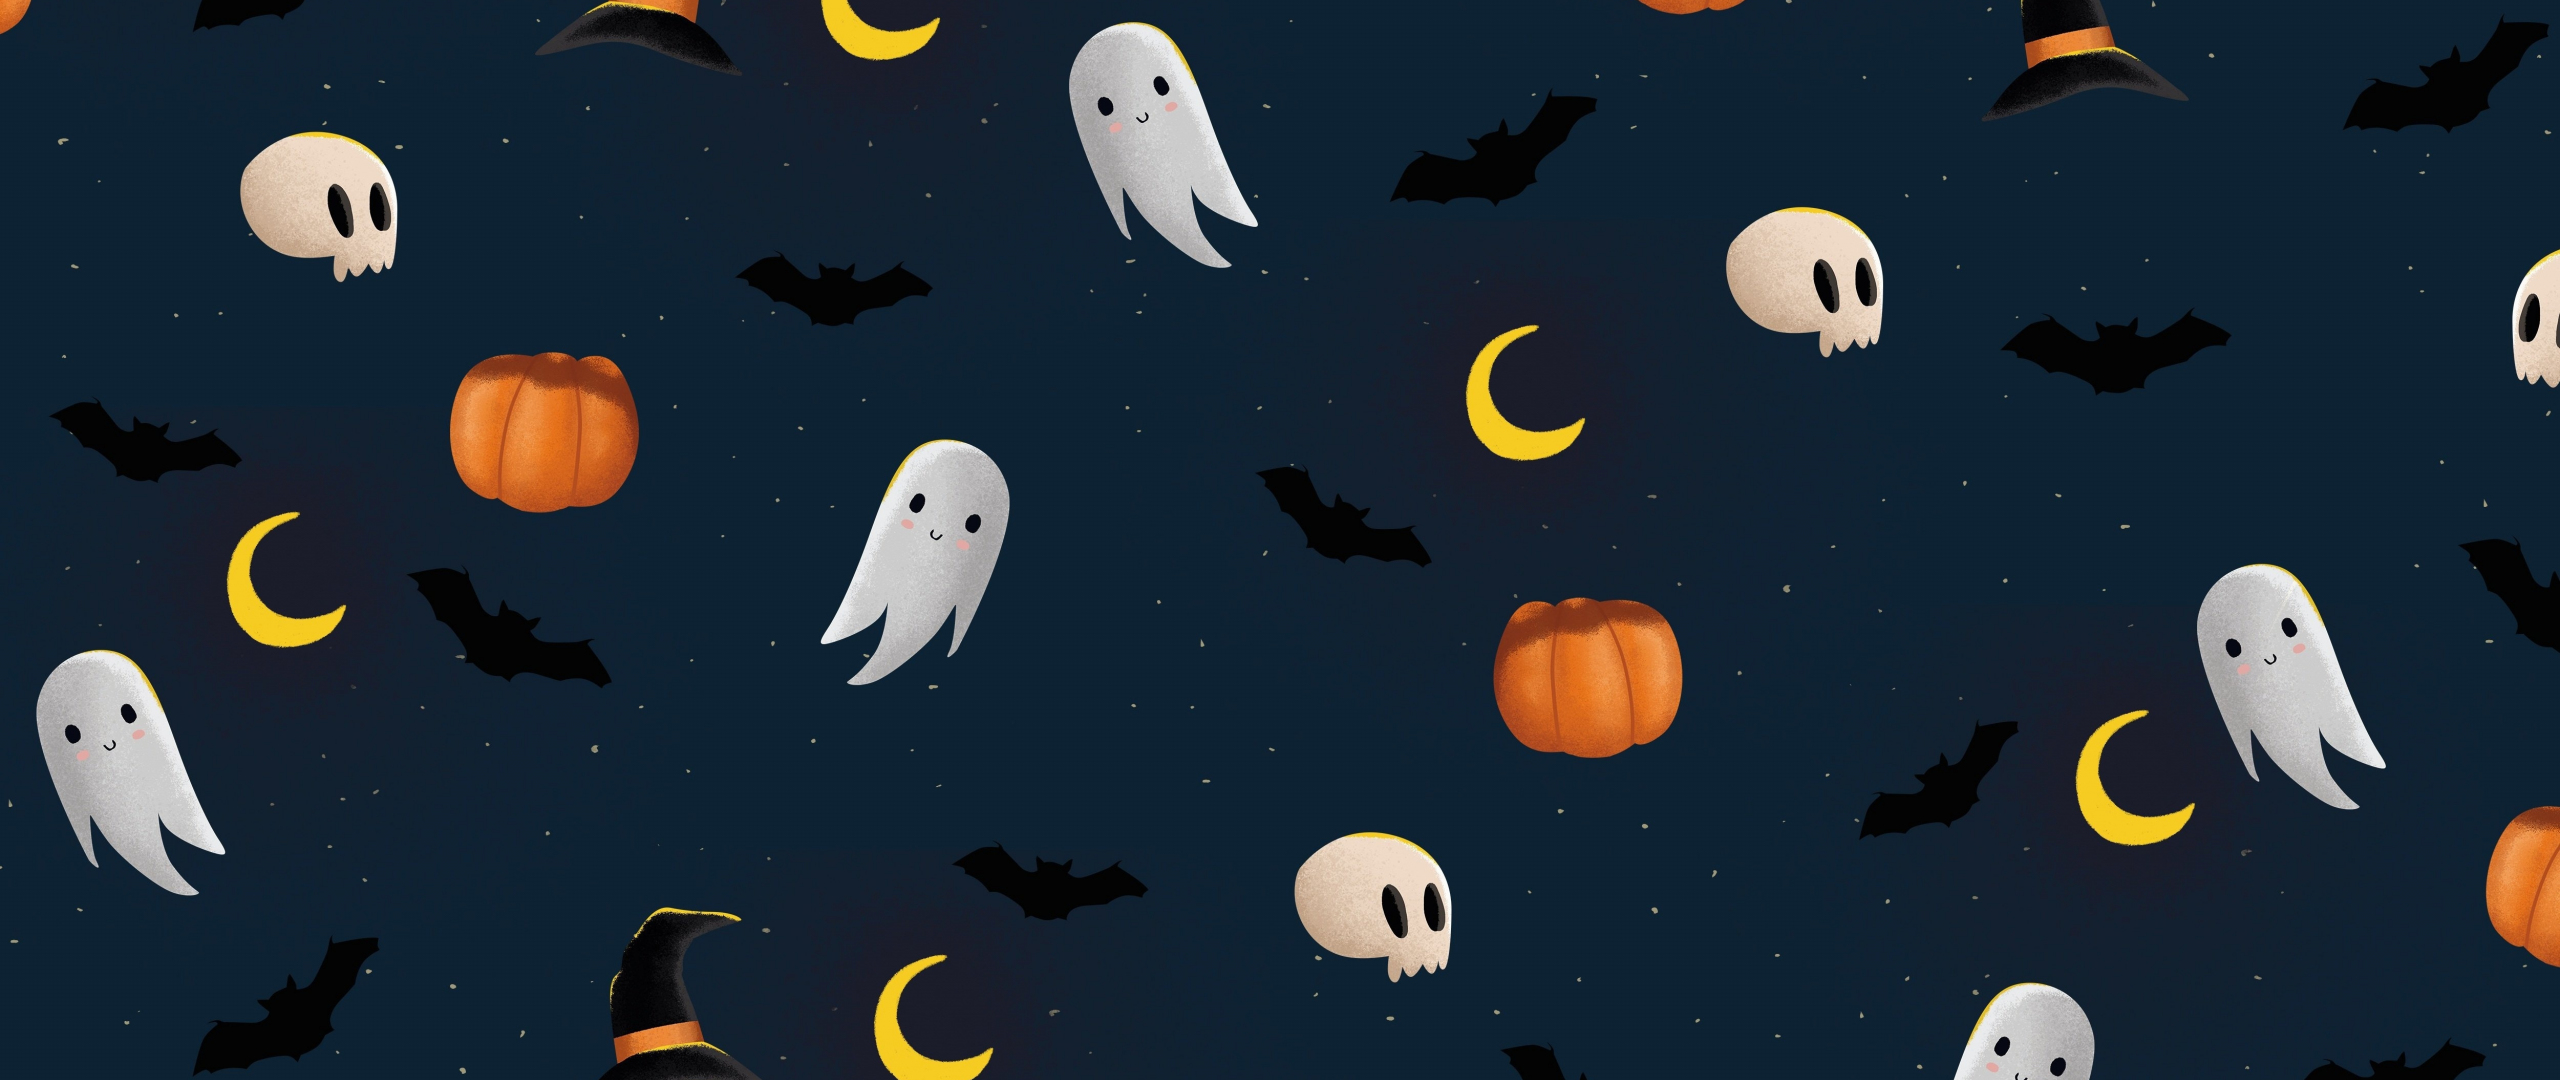 Download wallpaper 2560x1080 ghosts and pumpkins, halloween, art, dual wide  2560x1080 hd background, 27118